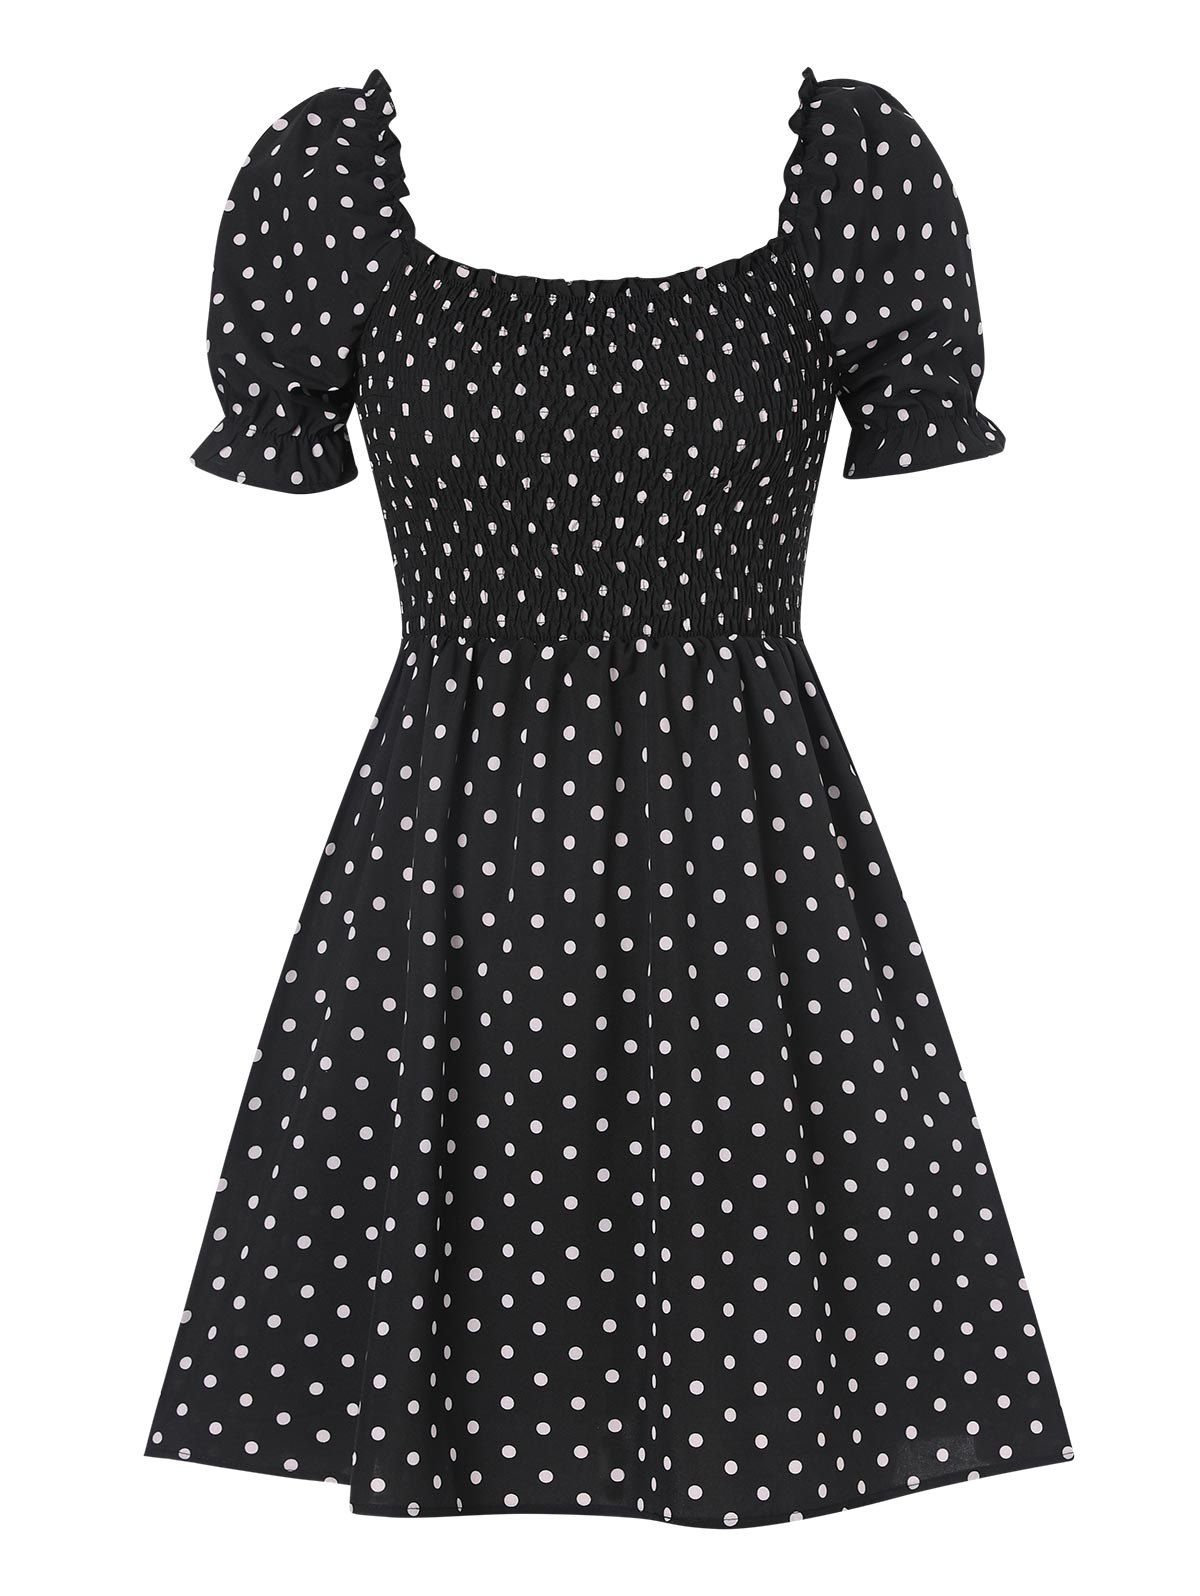 Polka Dot Puff Sleeve Smocked Dress - BLACK S